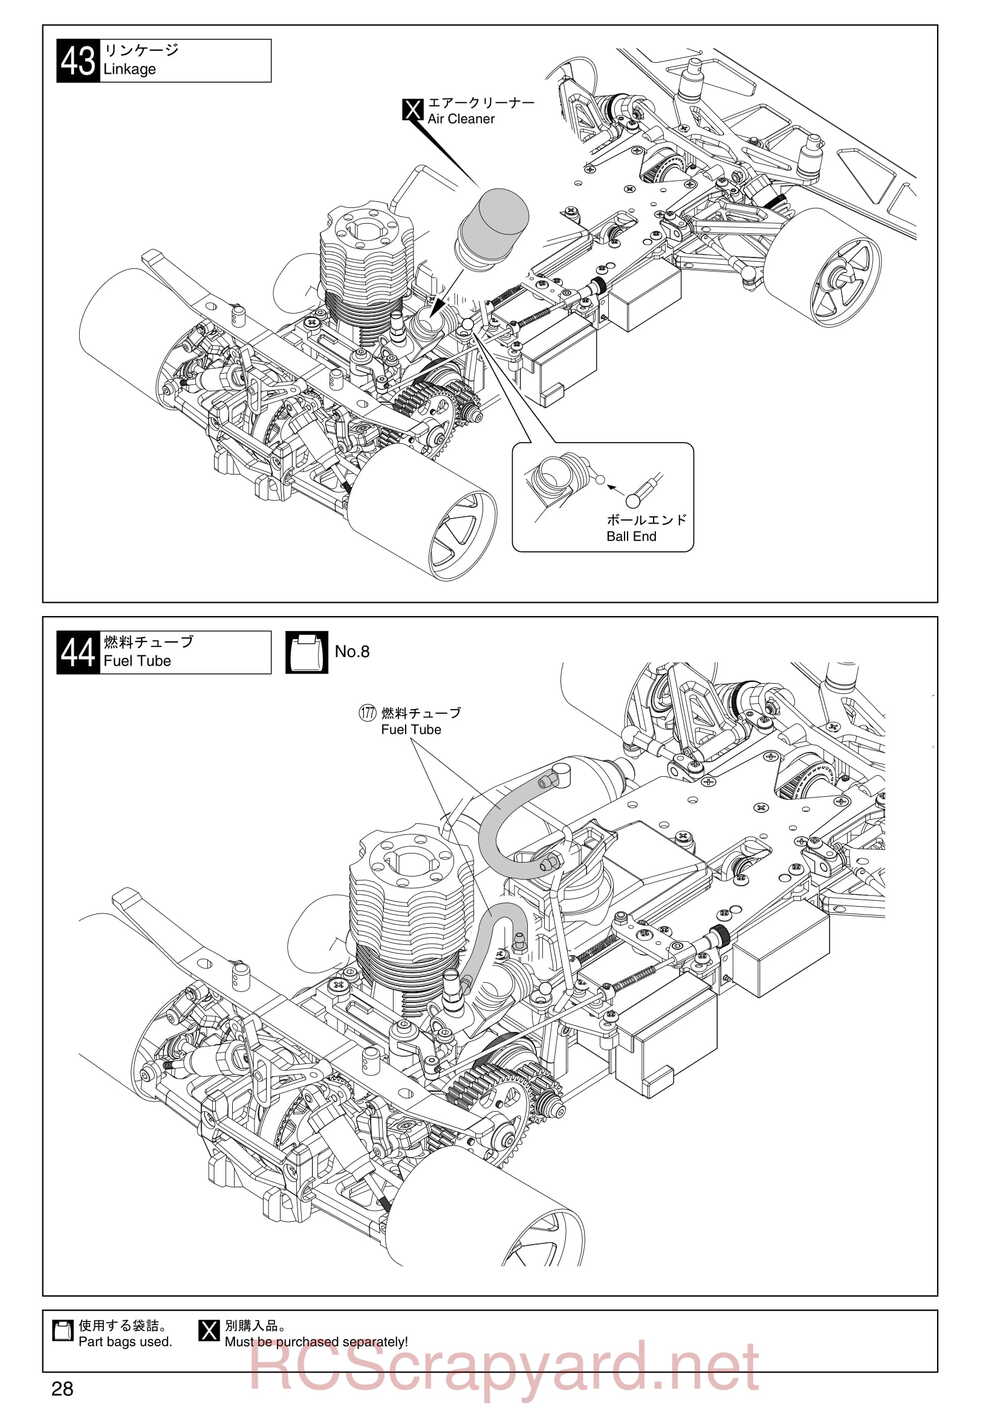 Kyosho - 31283 - Evolva-2003 - Manual - Page 28